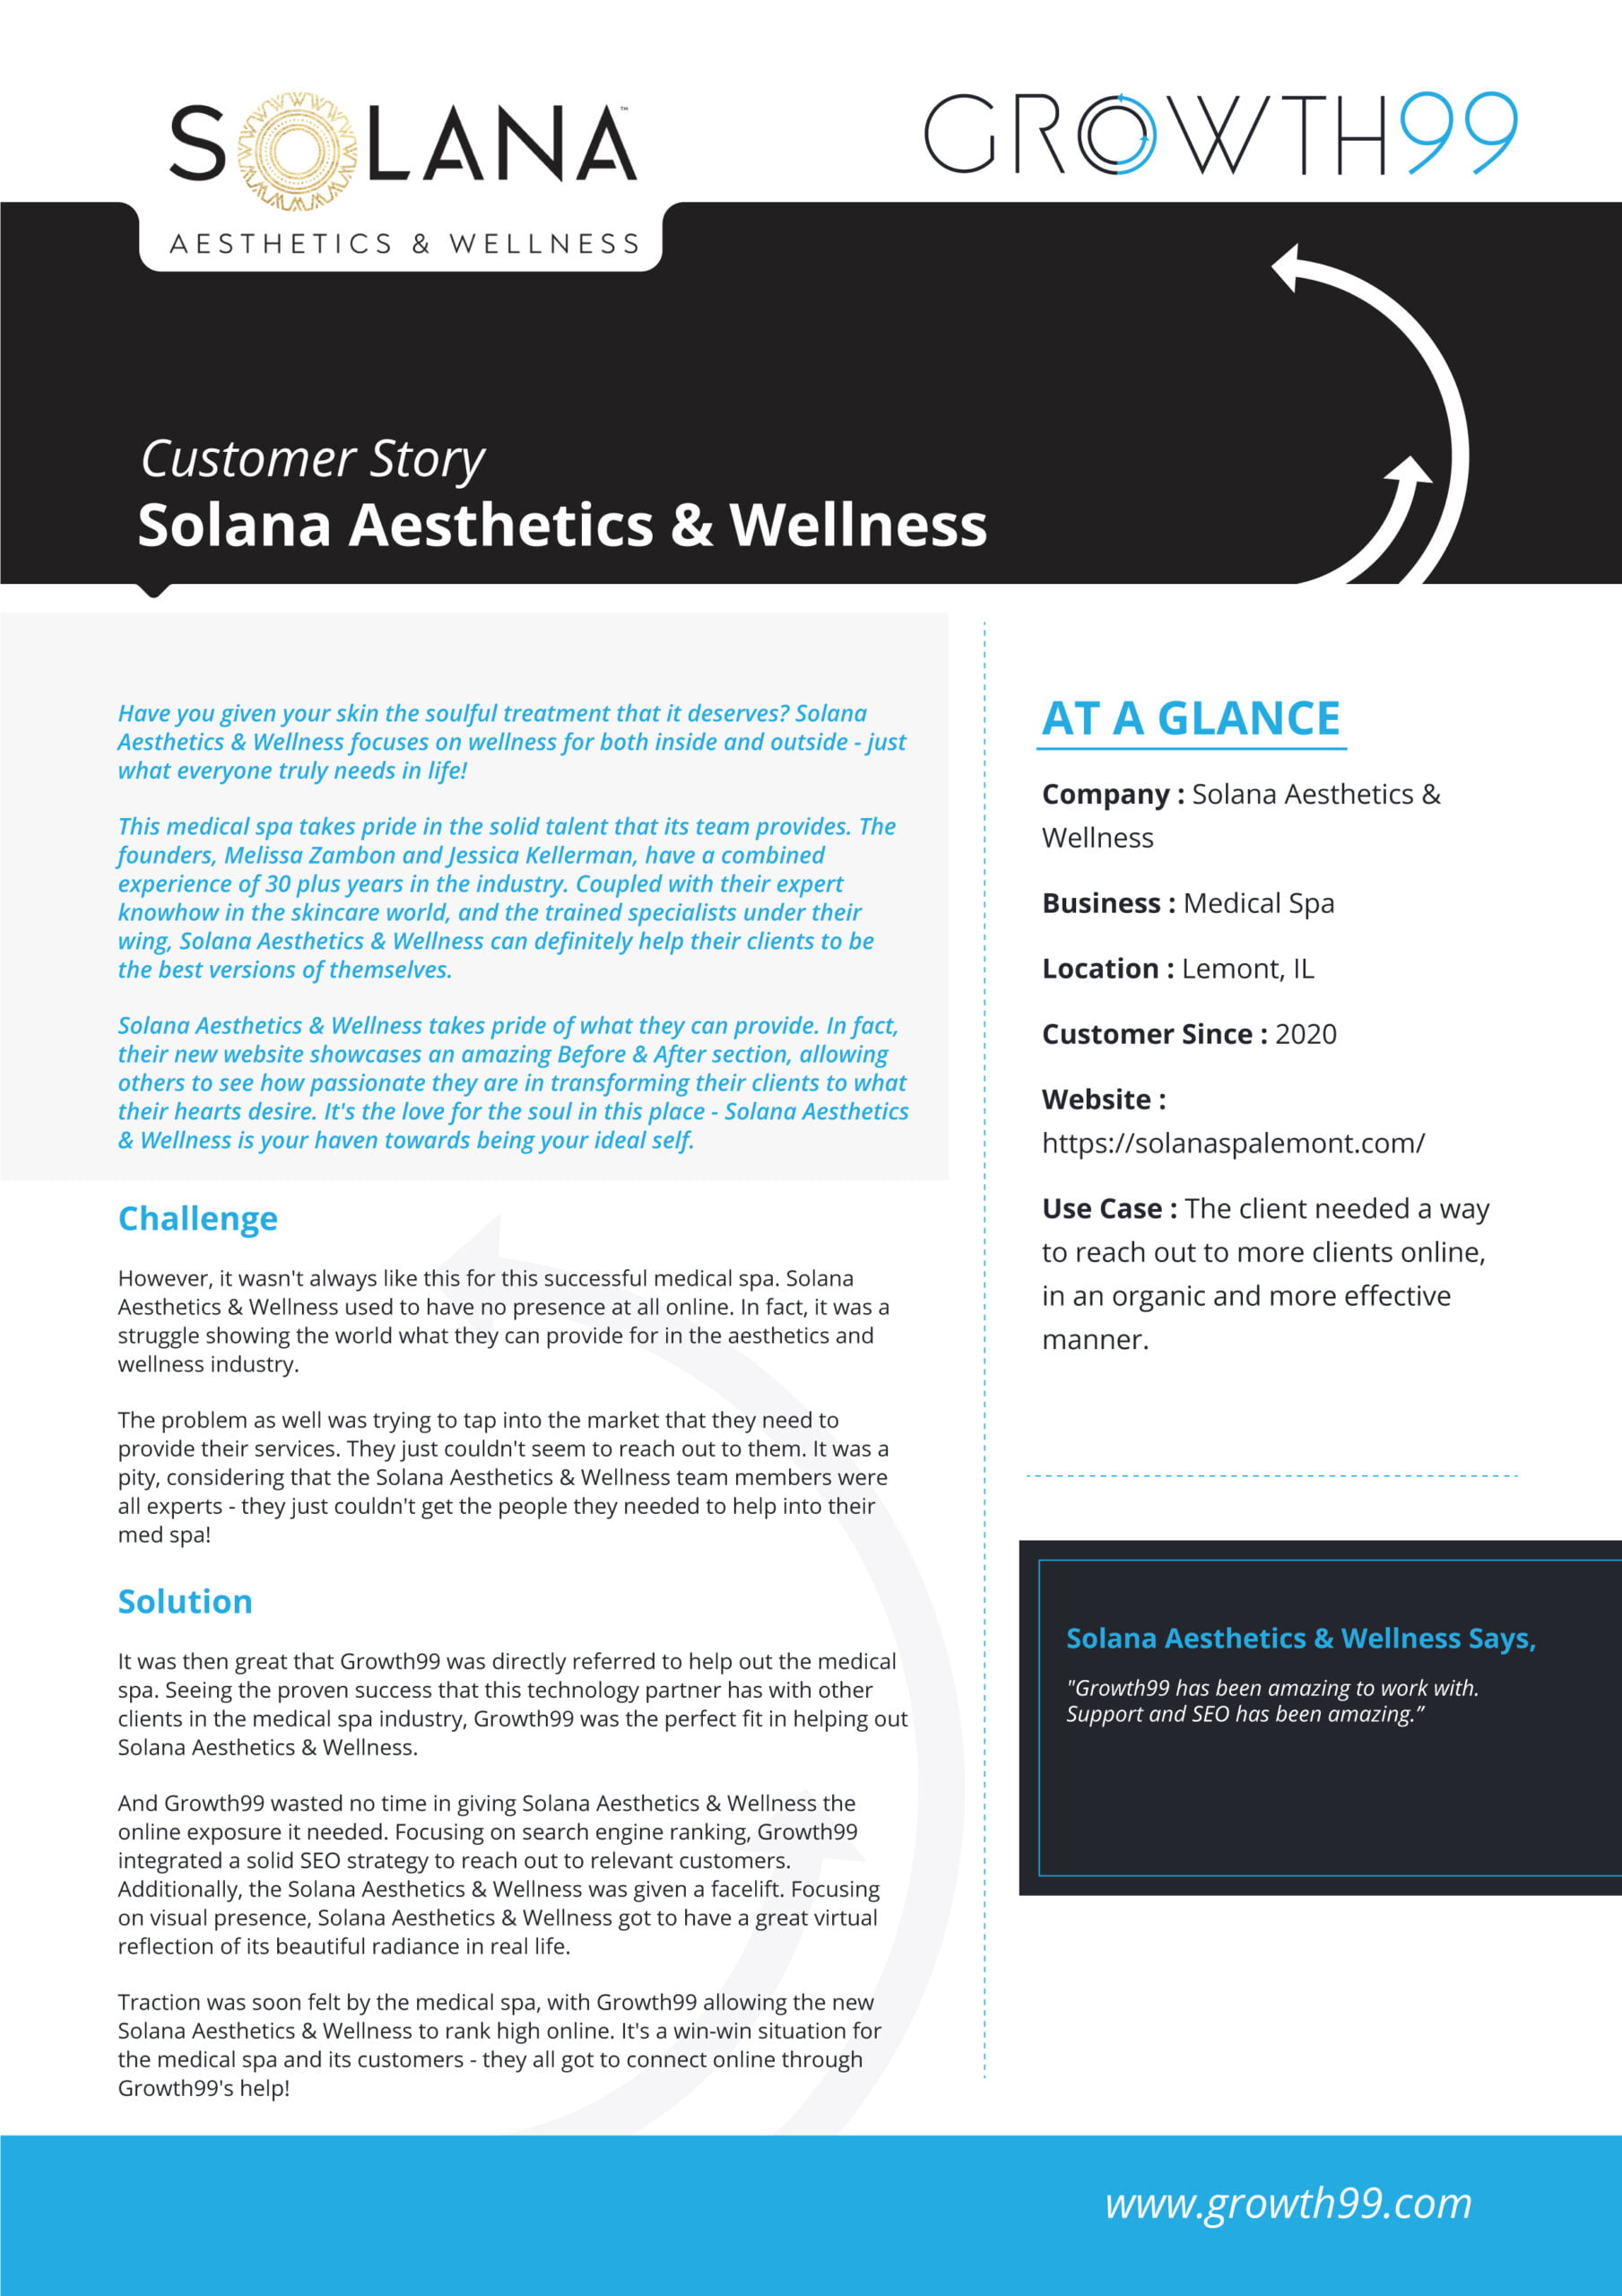 Solana Aesthetics & Wellness Case Study